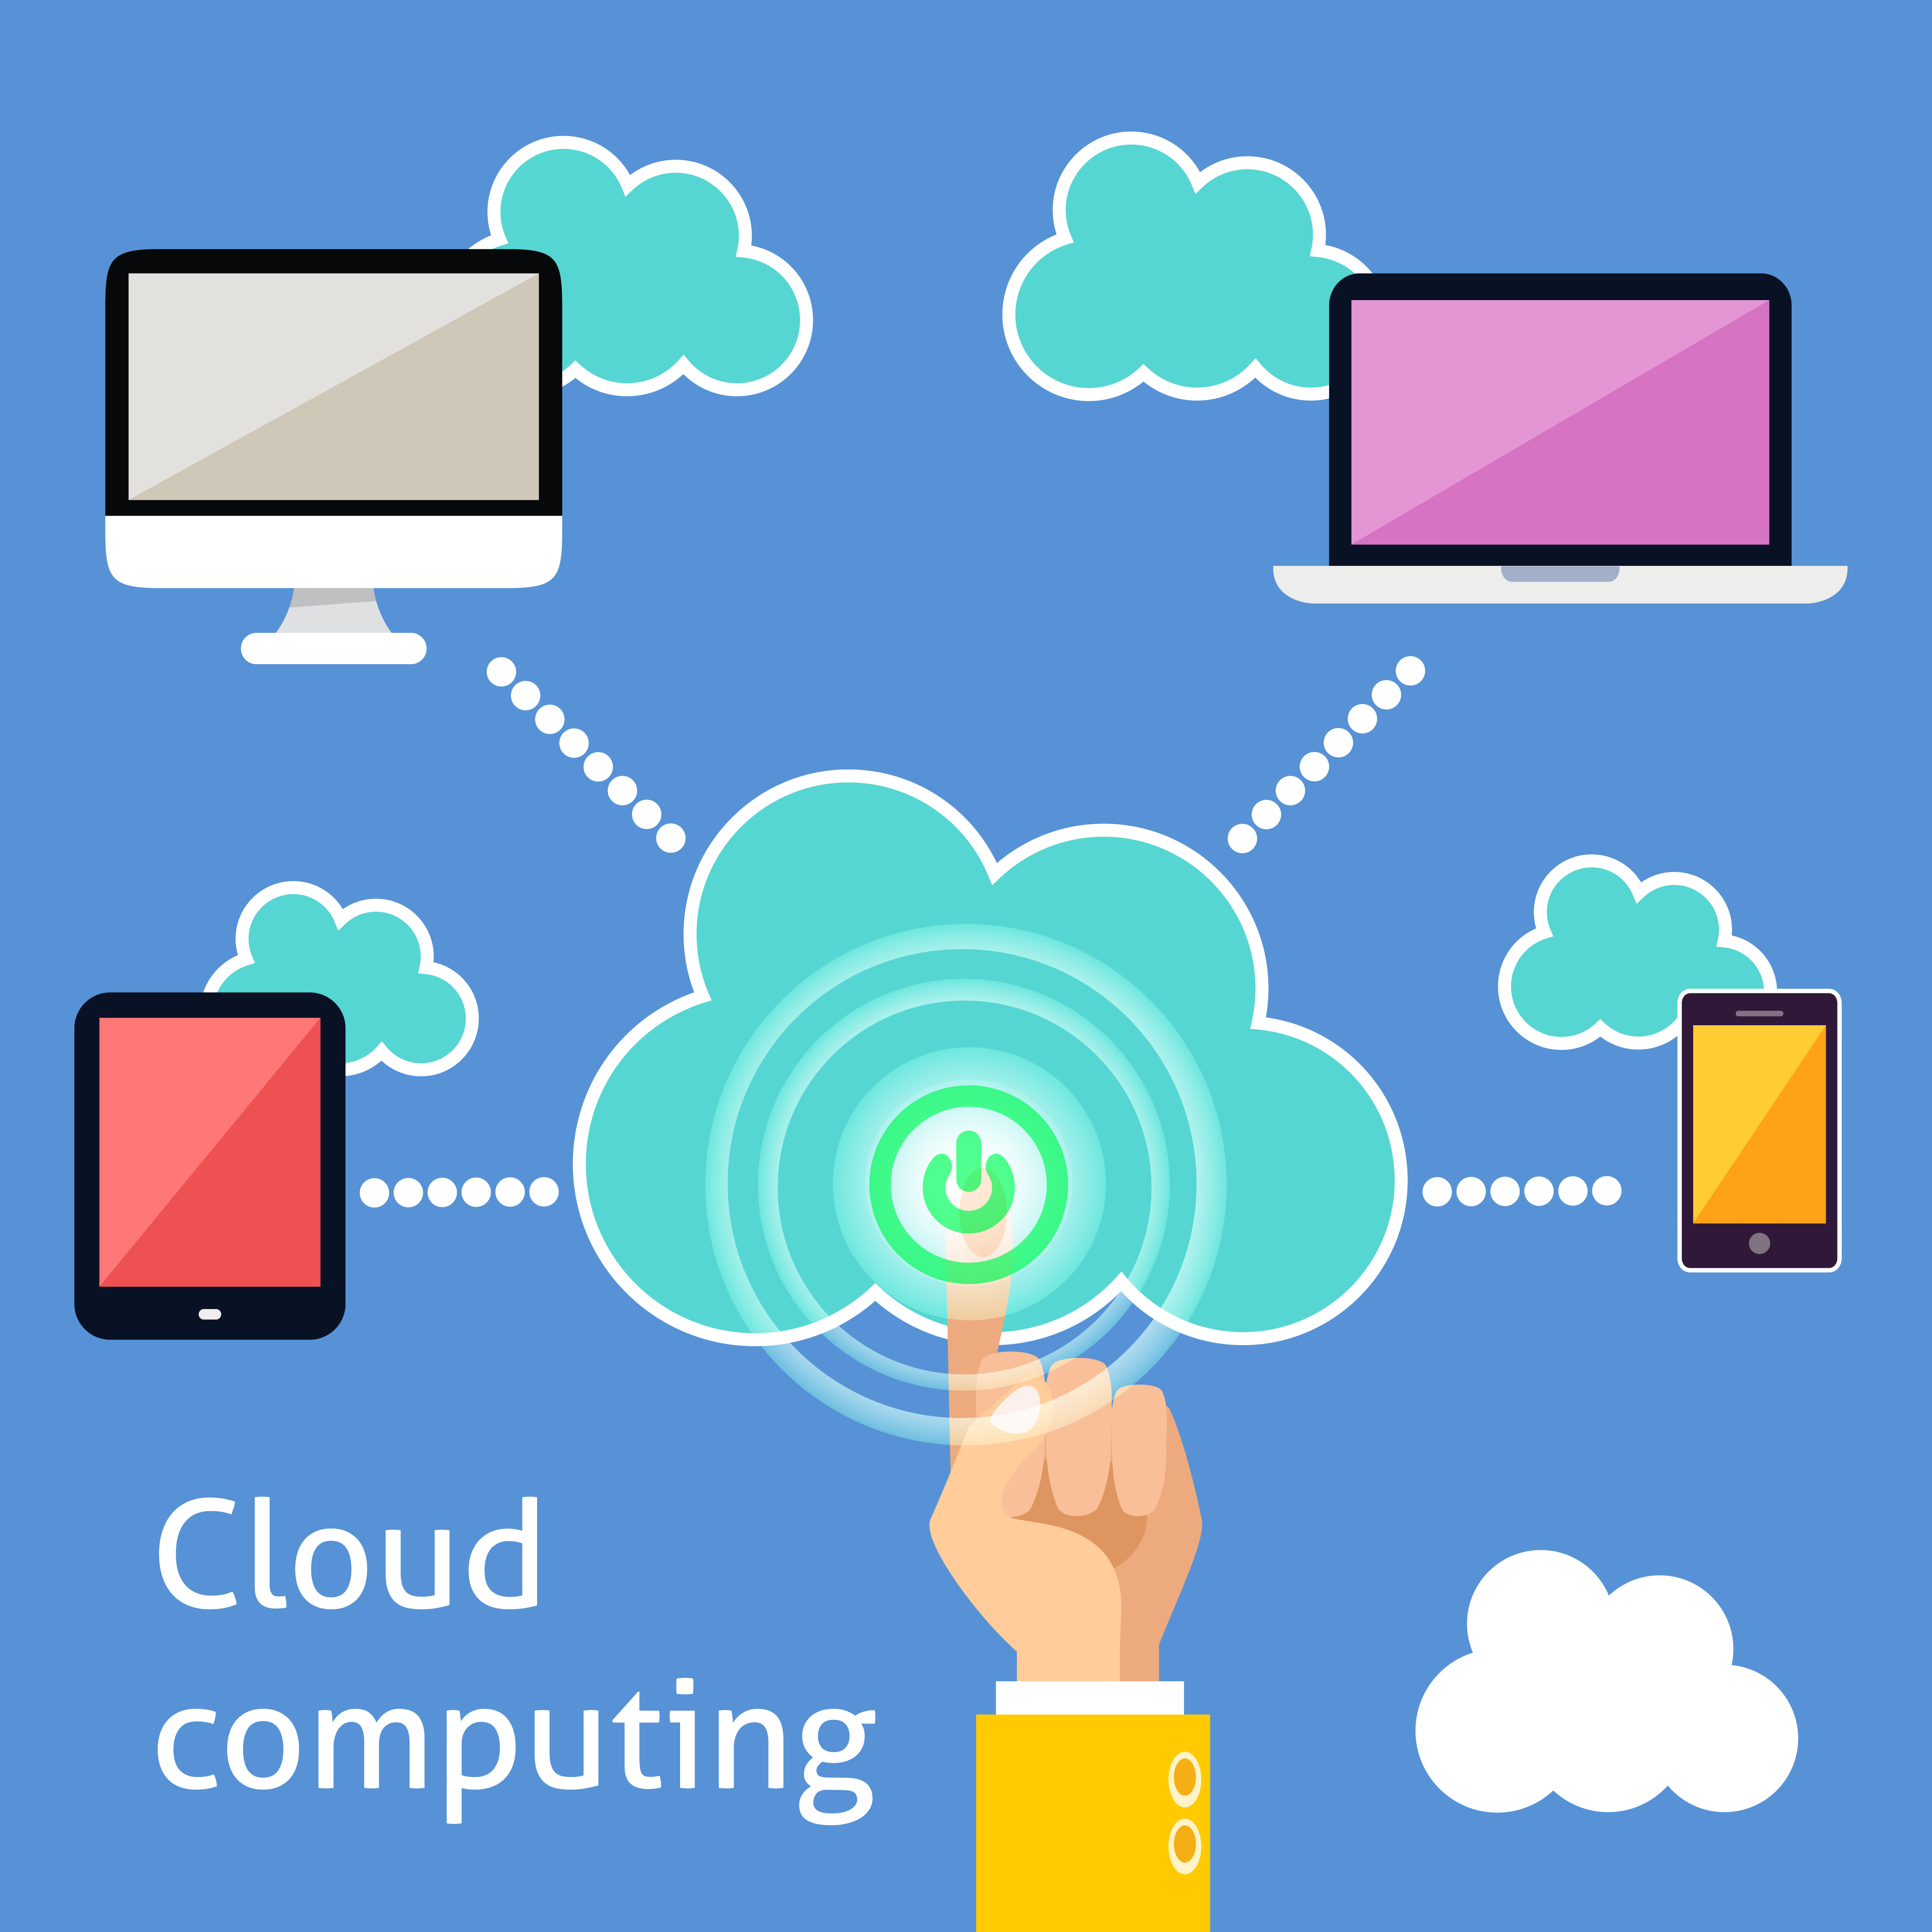 a presentation on cloud computing